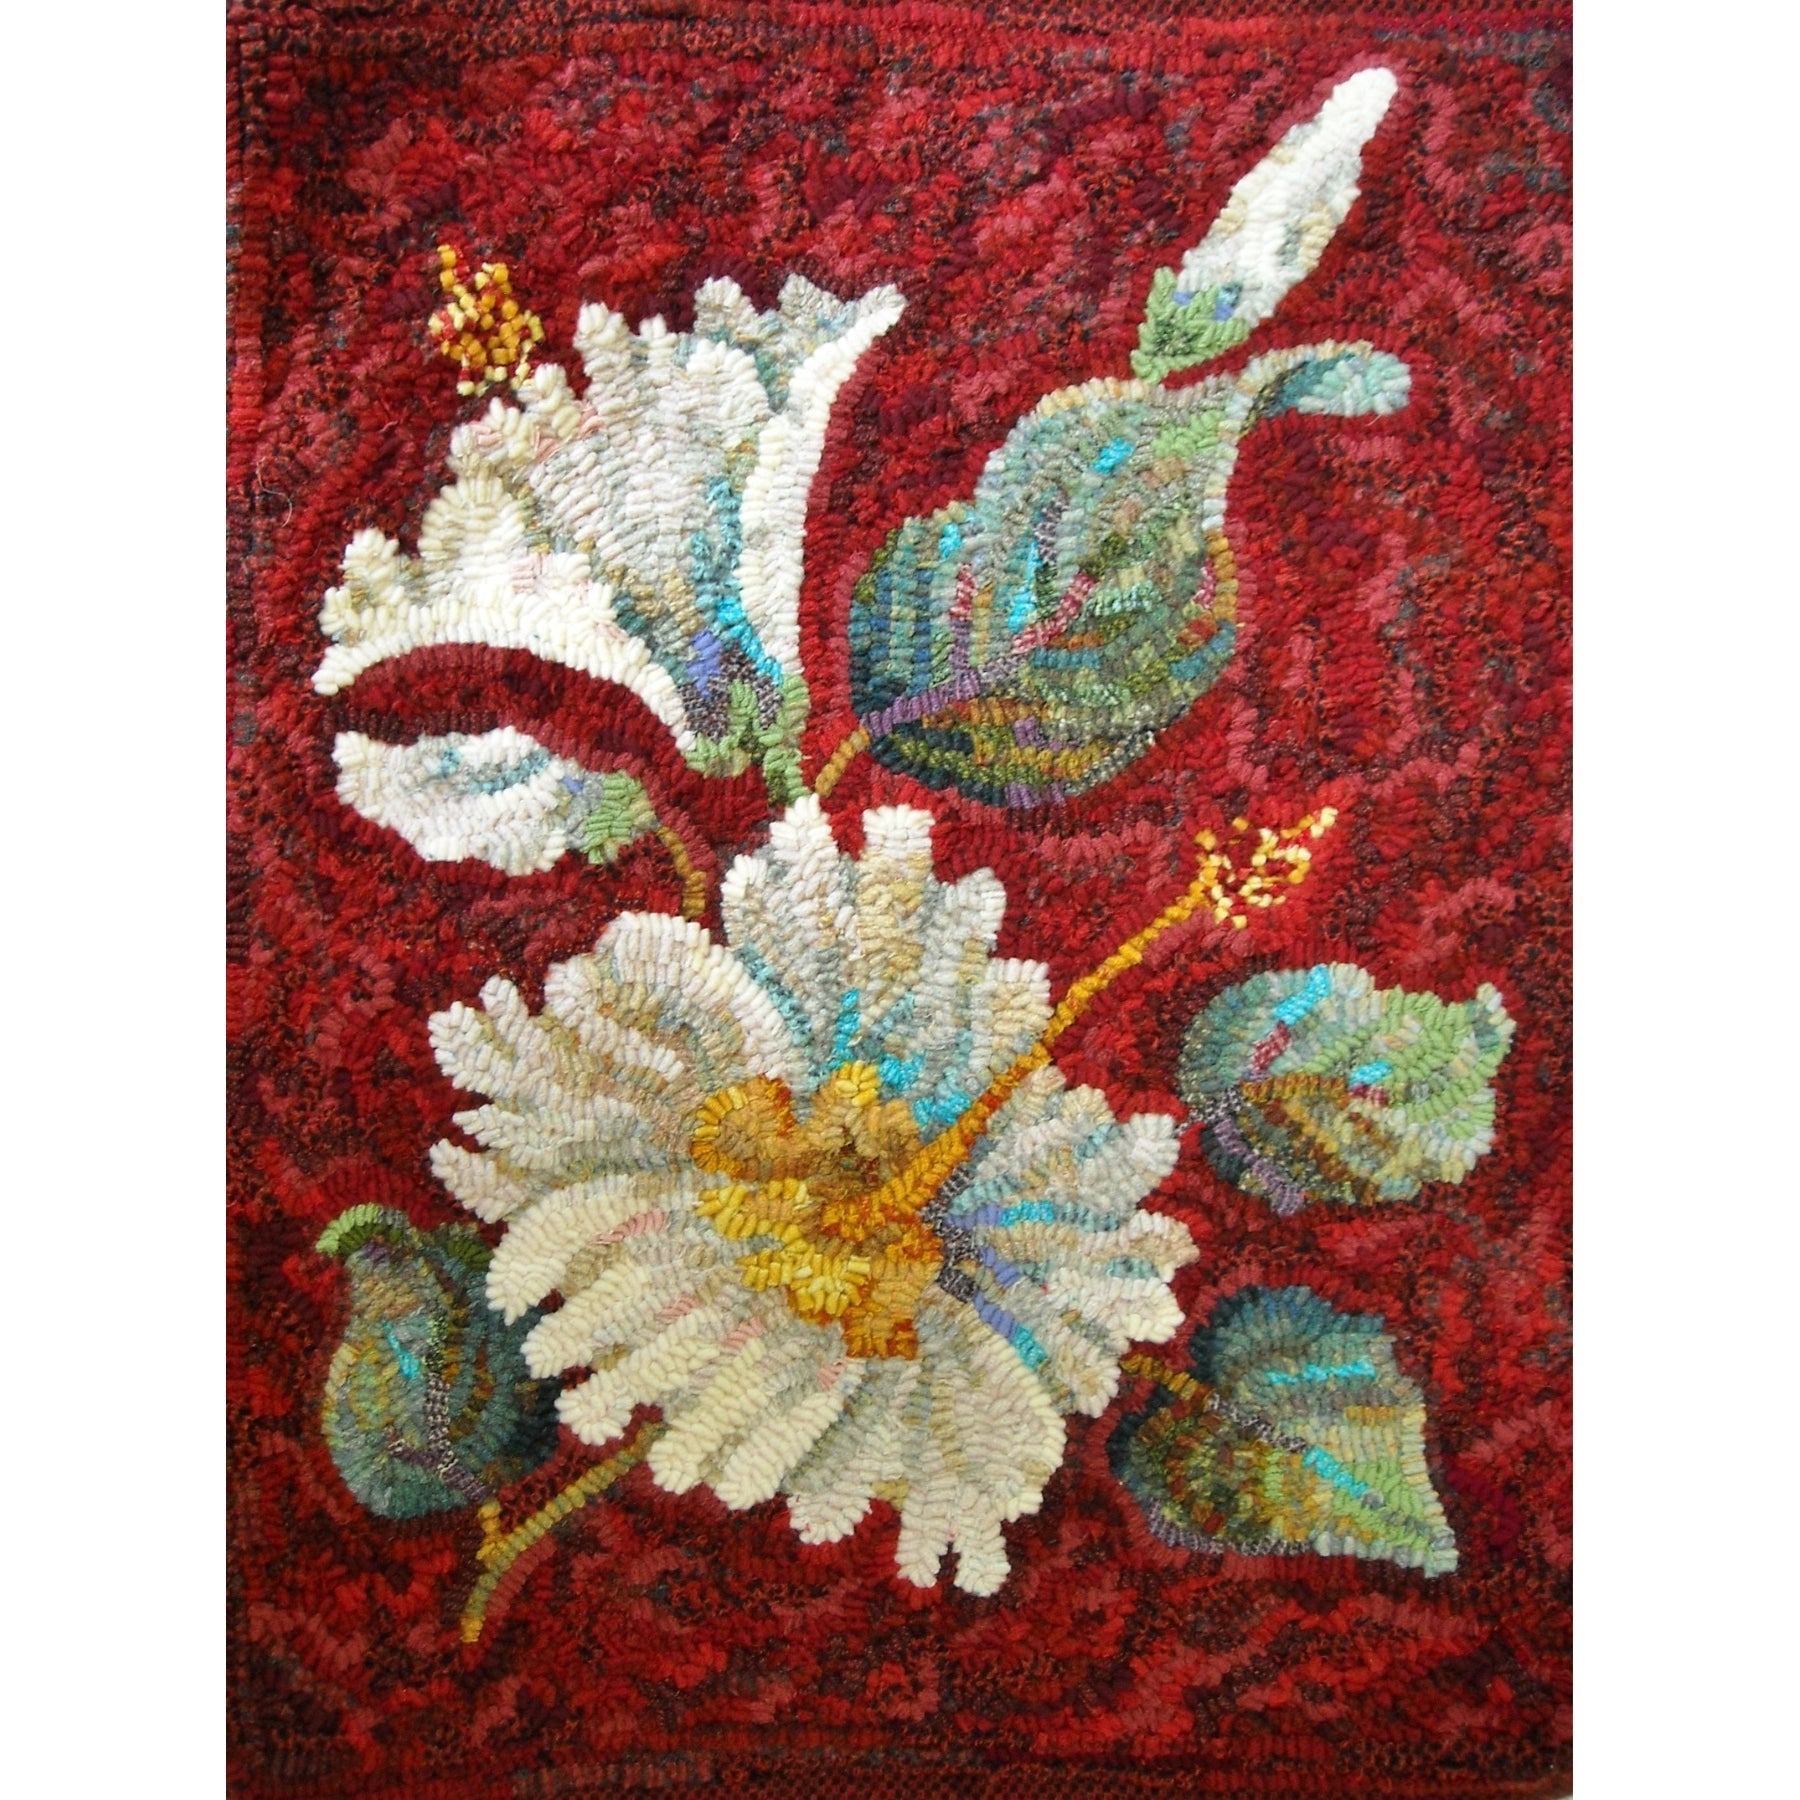 Hibiscus, rug hooked by Kathie Meyers